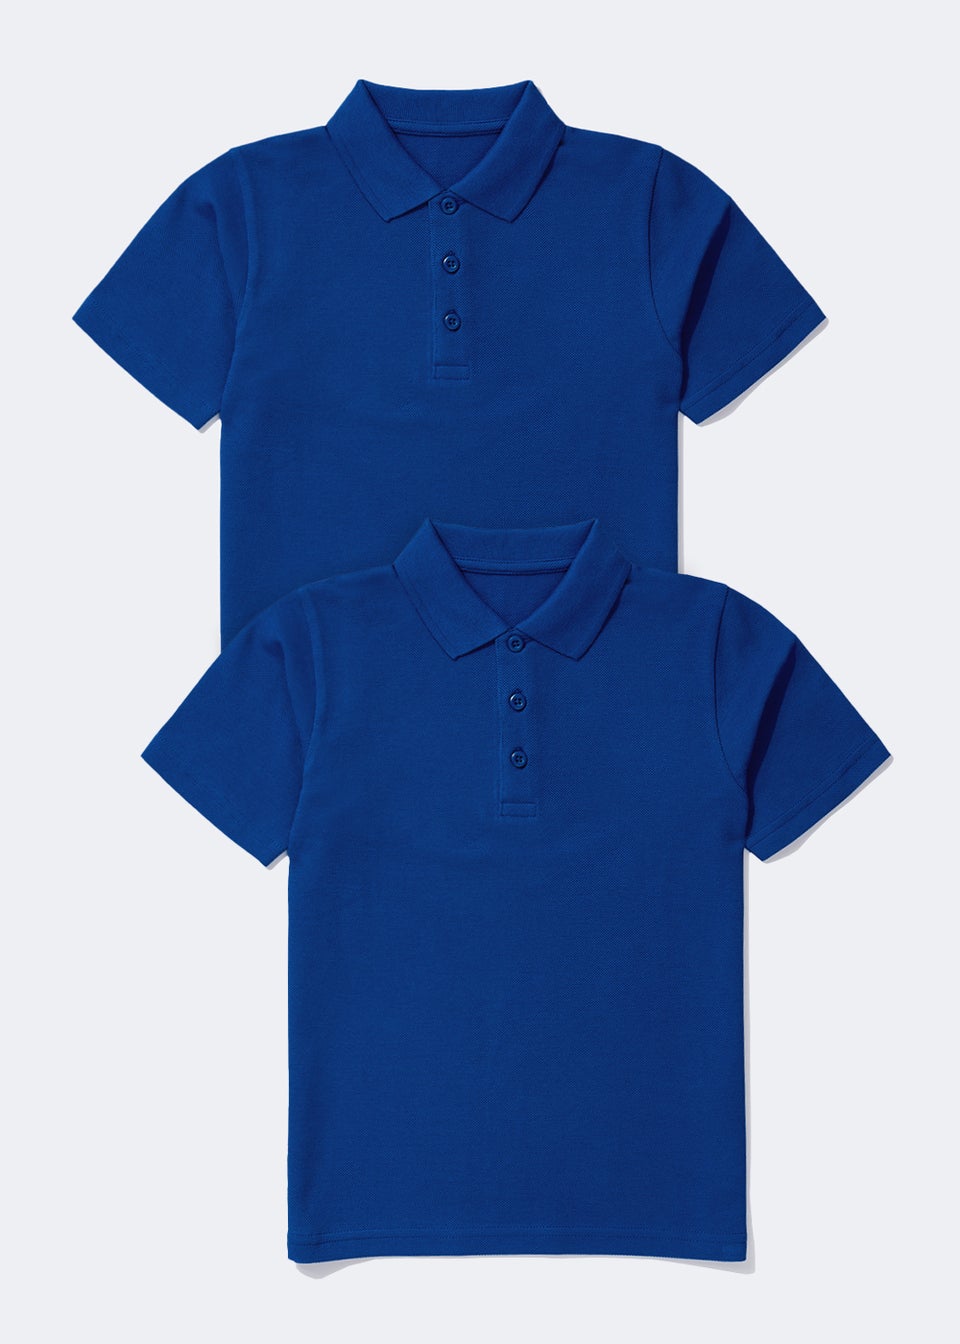 Kids 2 Pack Royal Blue School Polo Shirts (4-13yrs)